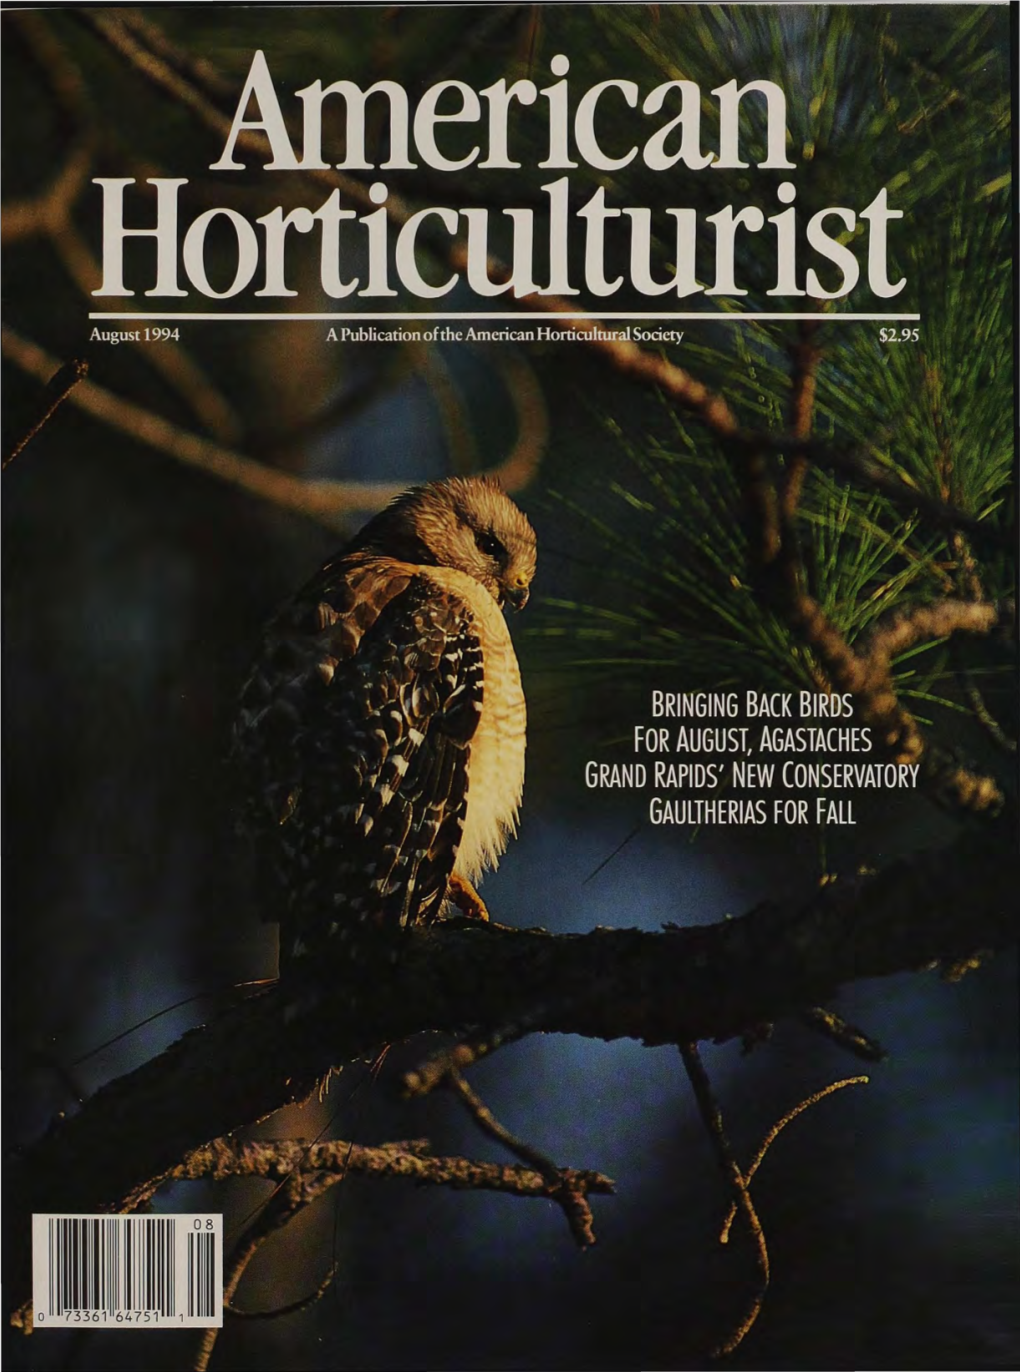 Horticulturist Volume 73, Number 8 August 1994